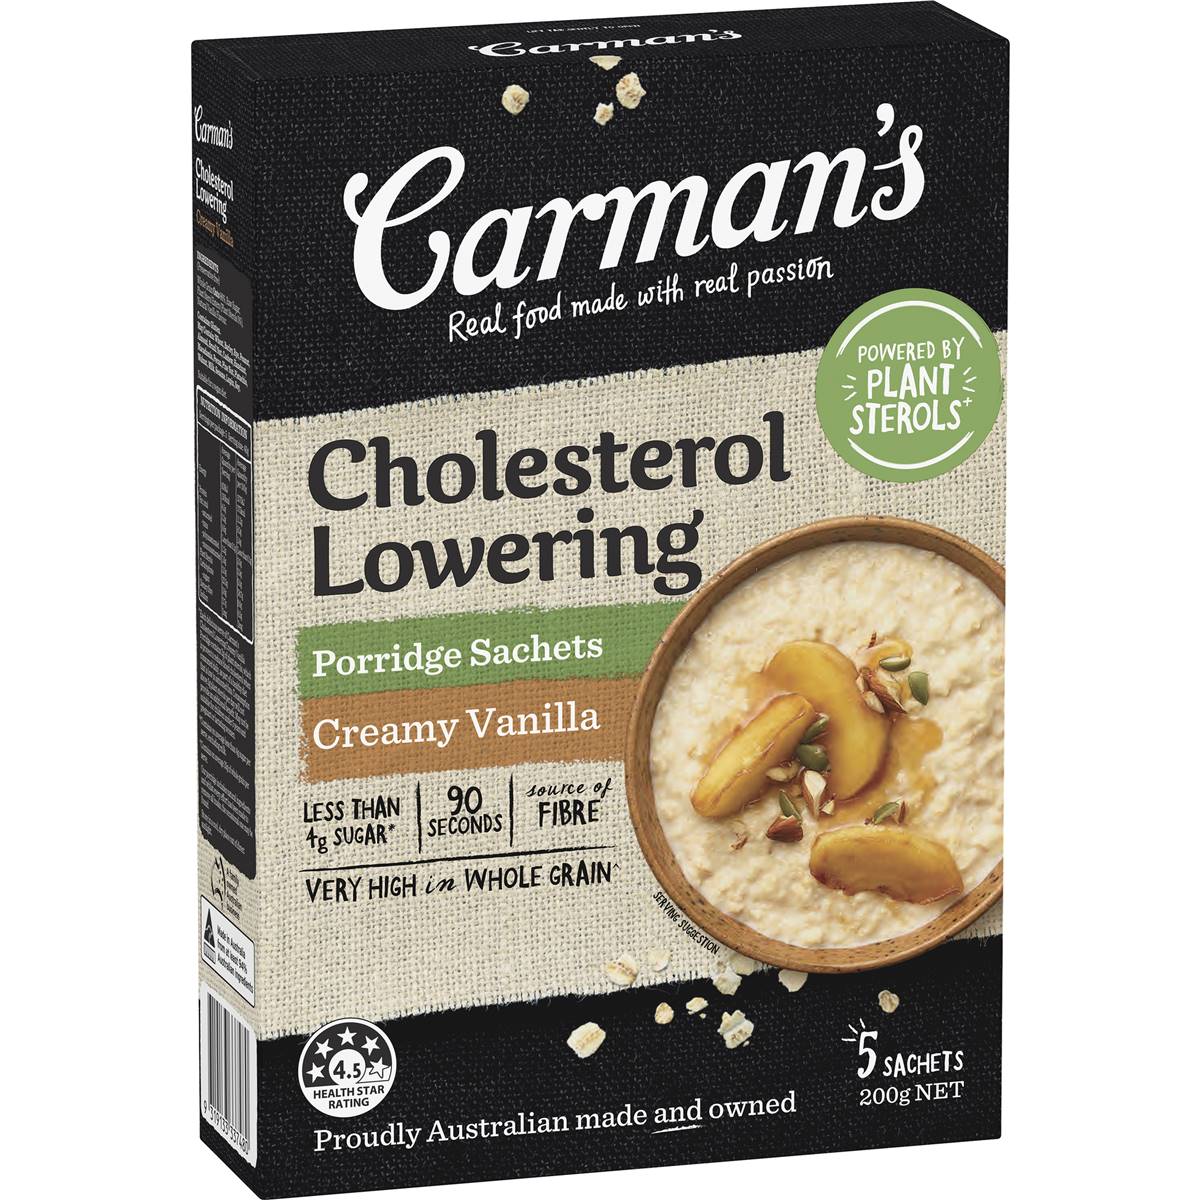 Calories in Carman's Cholesterol Lowering Porridge Sachets Creamy Vanilla